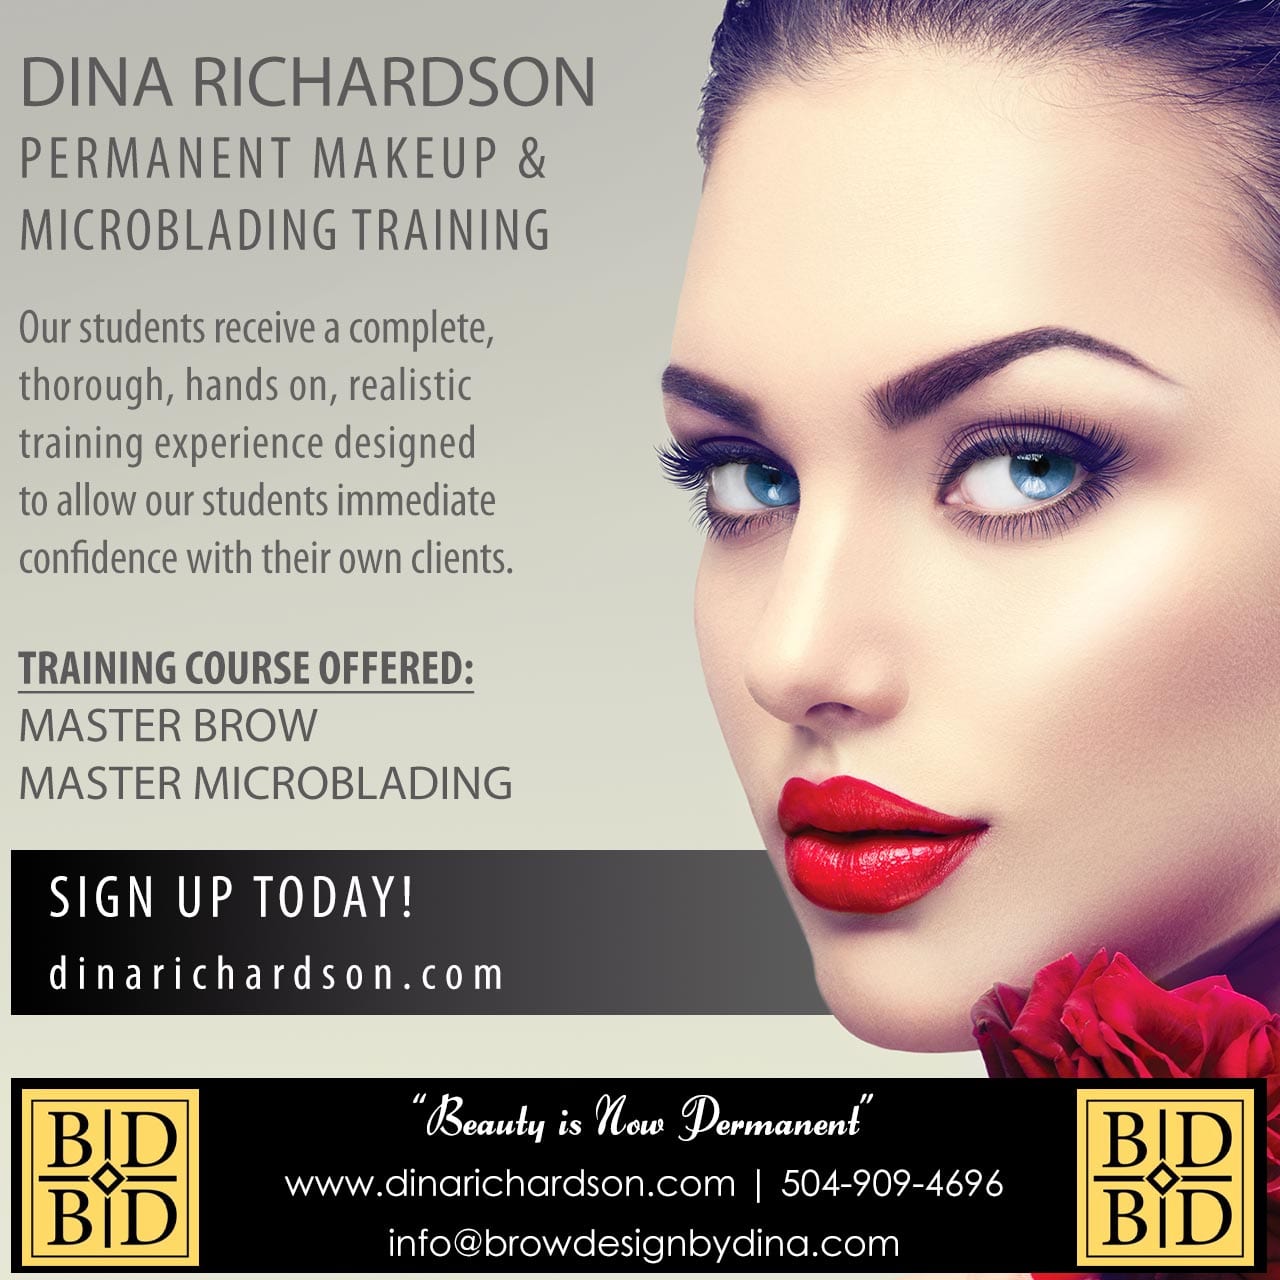 Dina Richardson PMU training